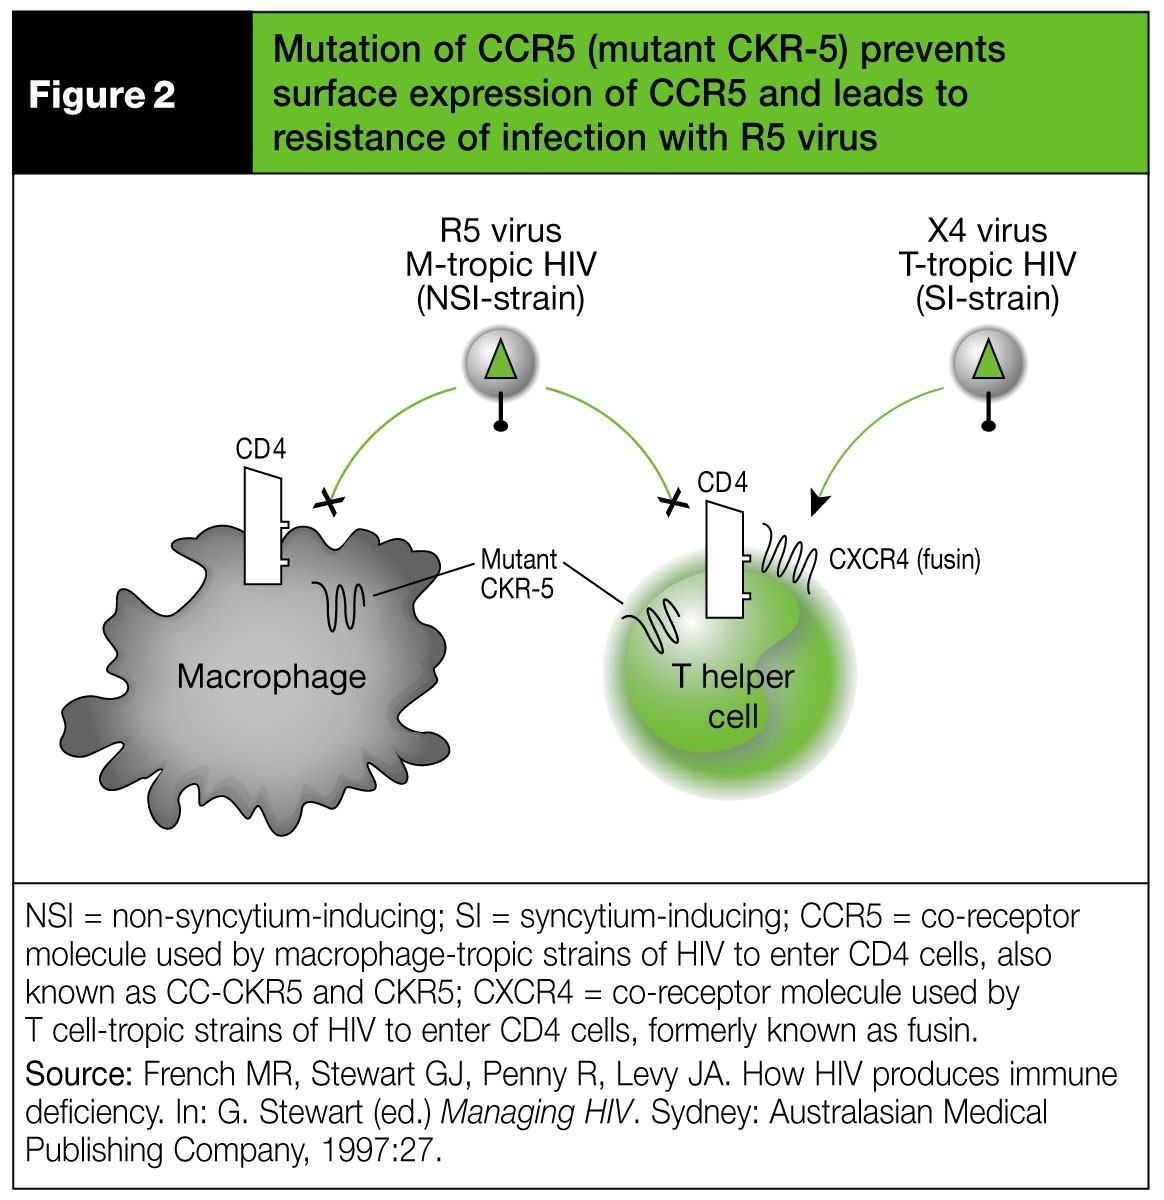 Mutation of CCR5